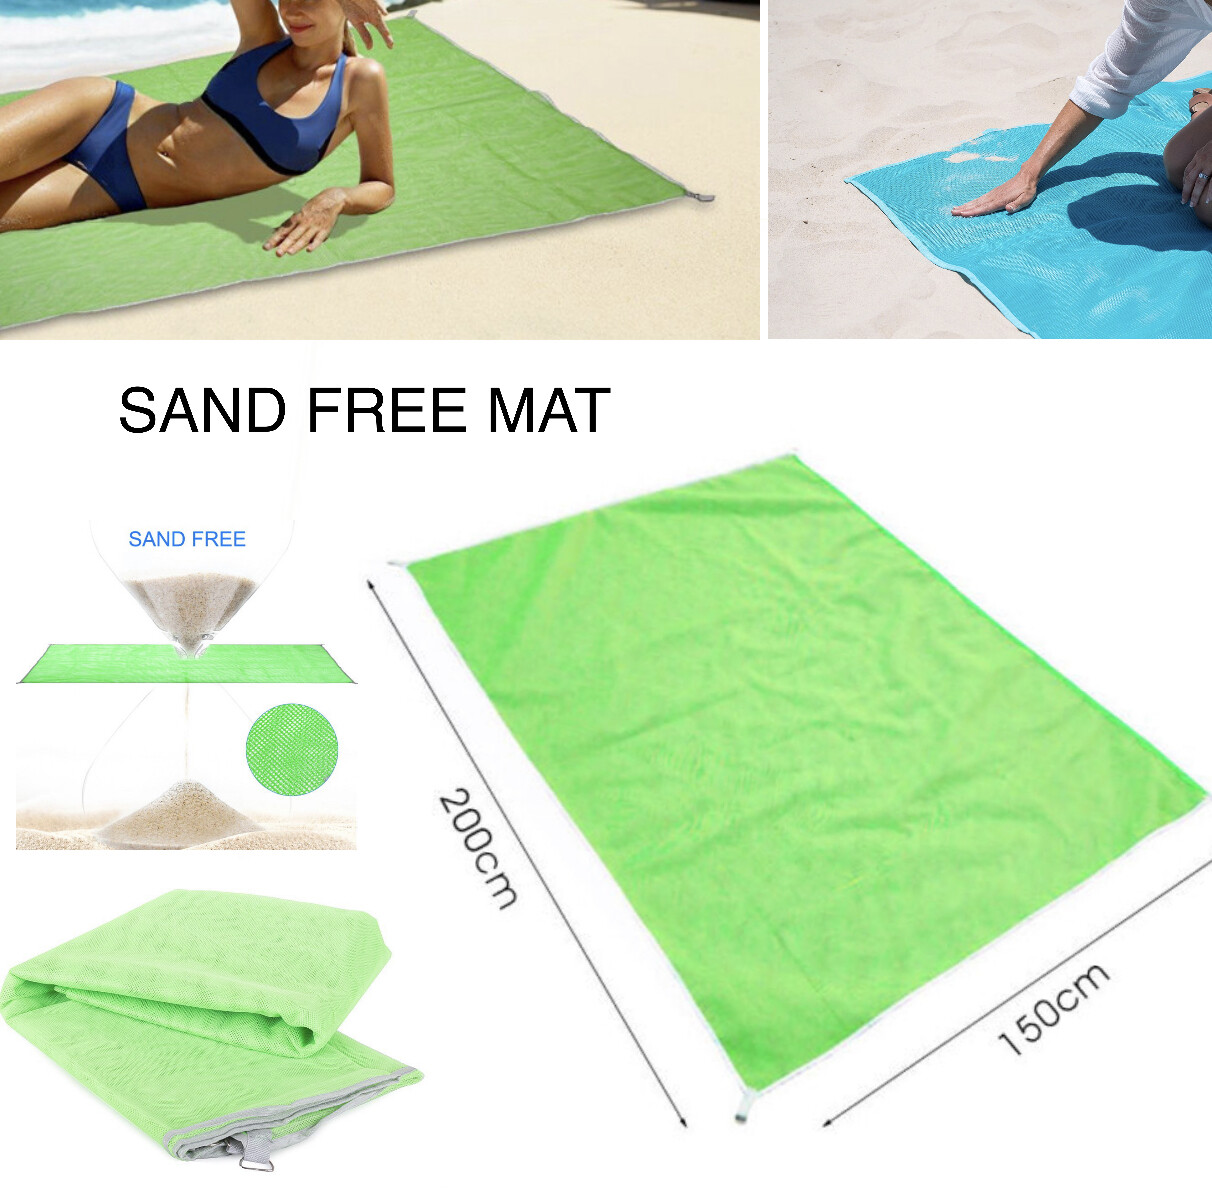 Sand Free Mat